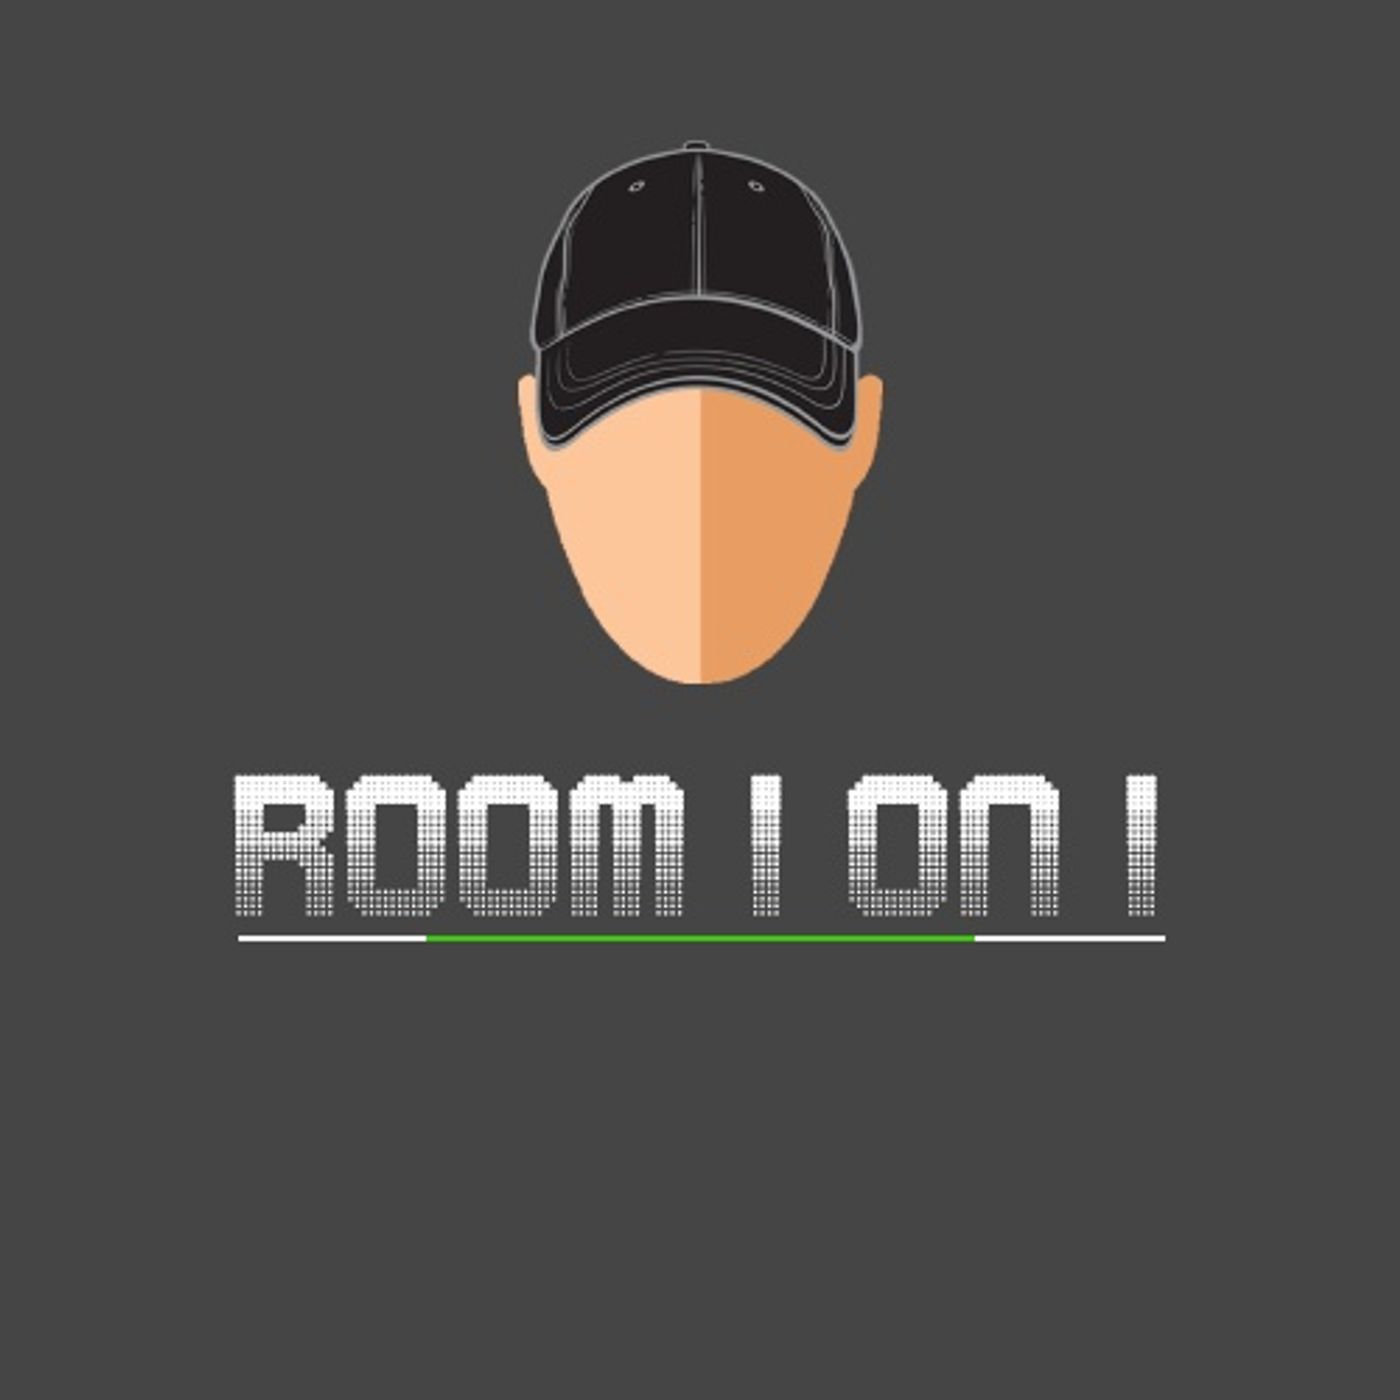 Homebhoys - Room 1 on 1 - Matt O’Reilly